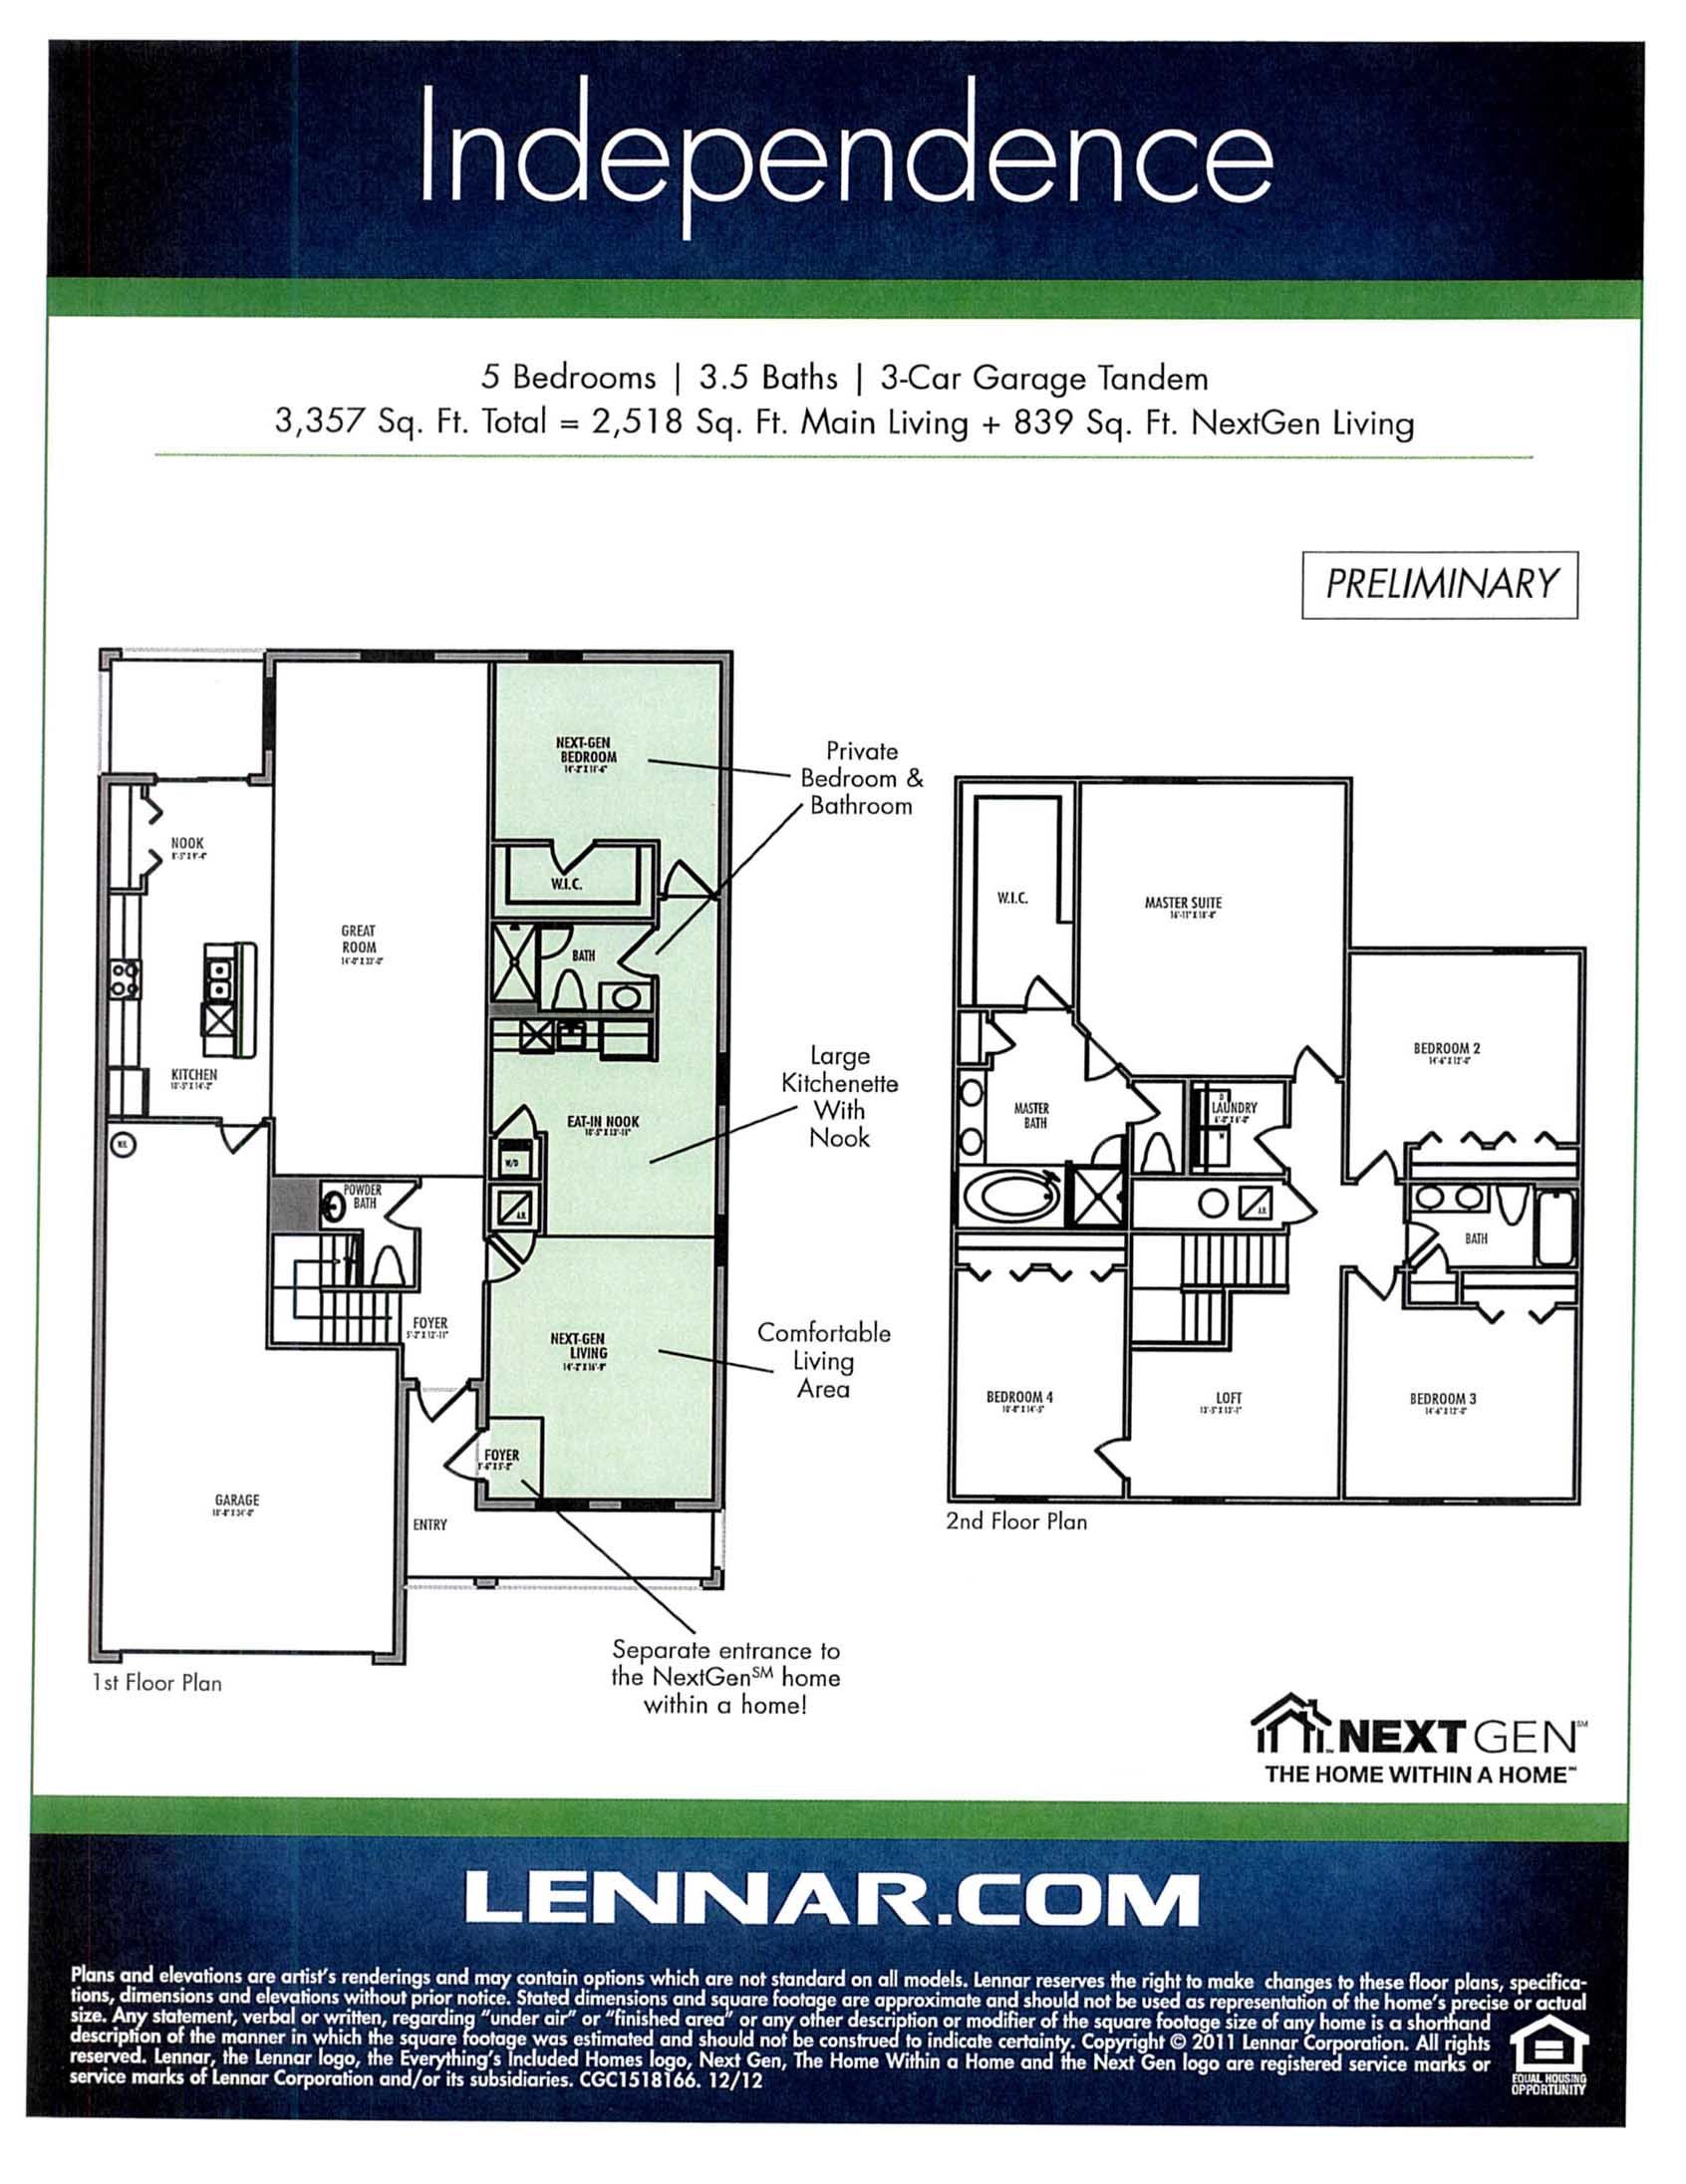 Lennar homes Independence Floorplan Next Gen...Home within